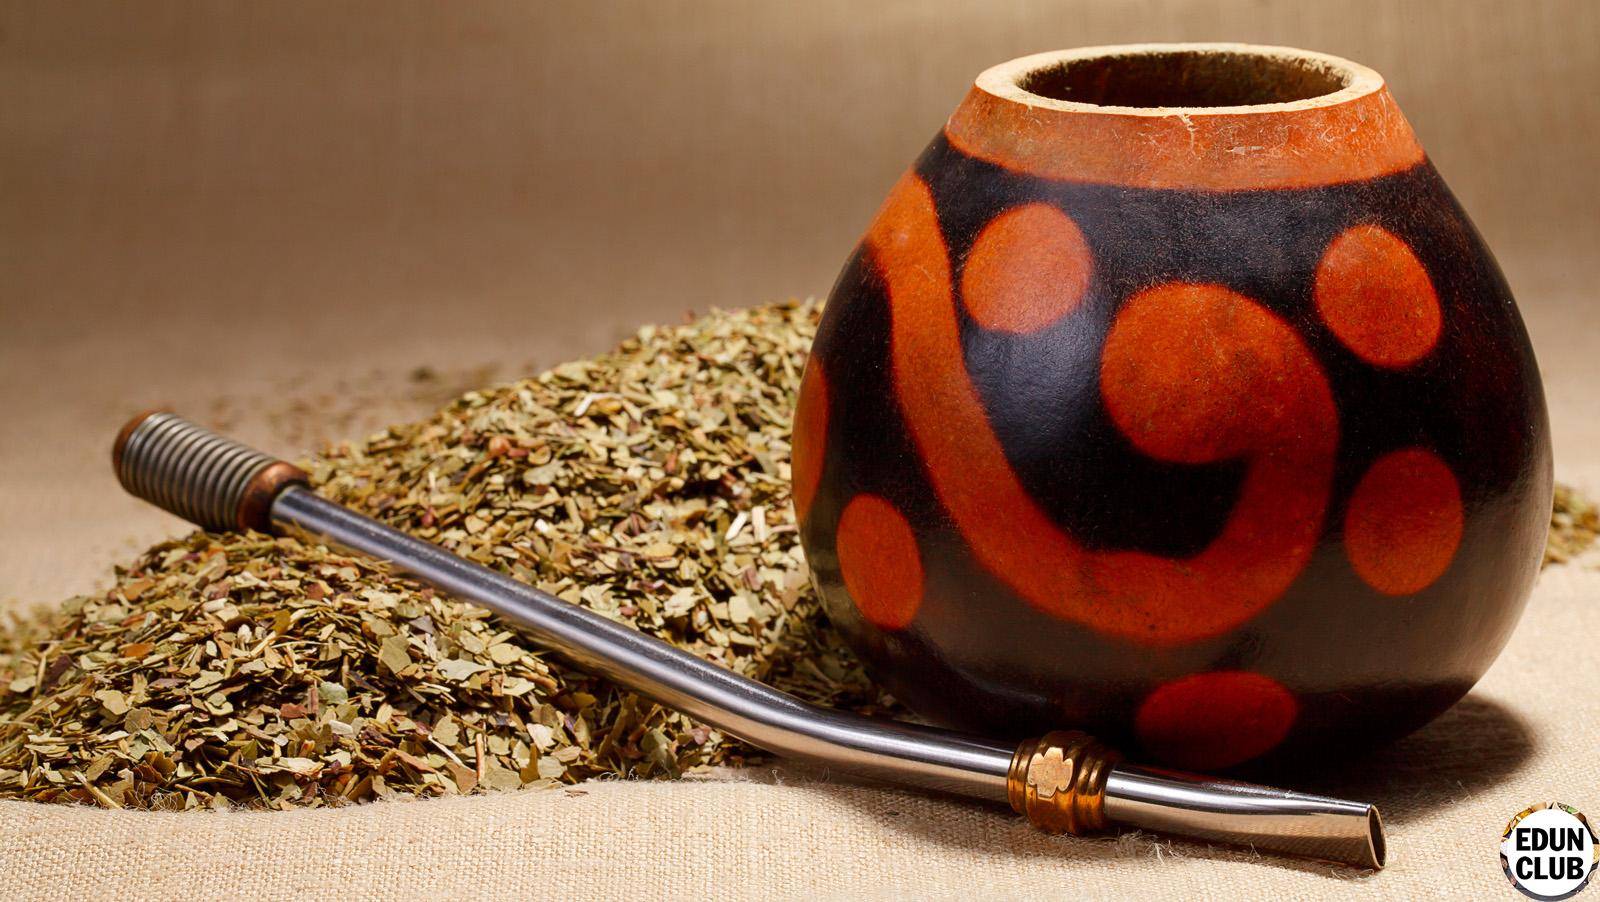 Парагвайский чай мате